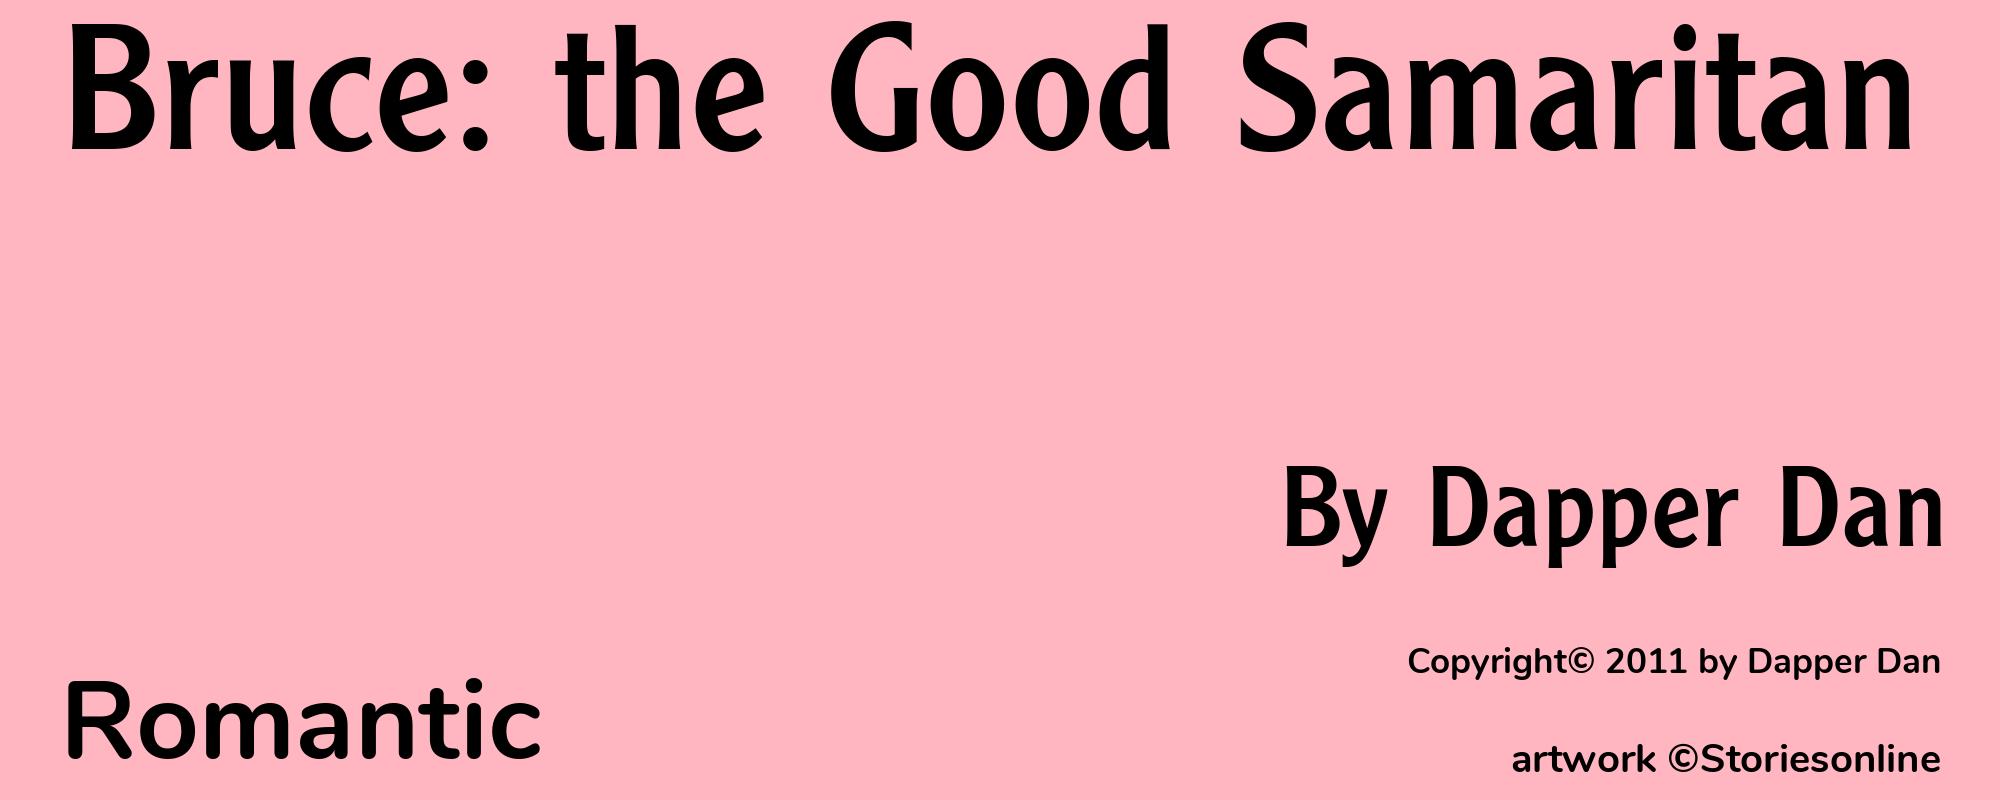 Bruce: the Good Samaritan - Cover